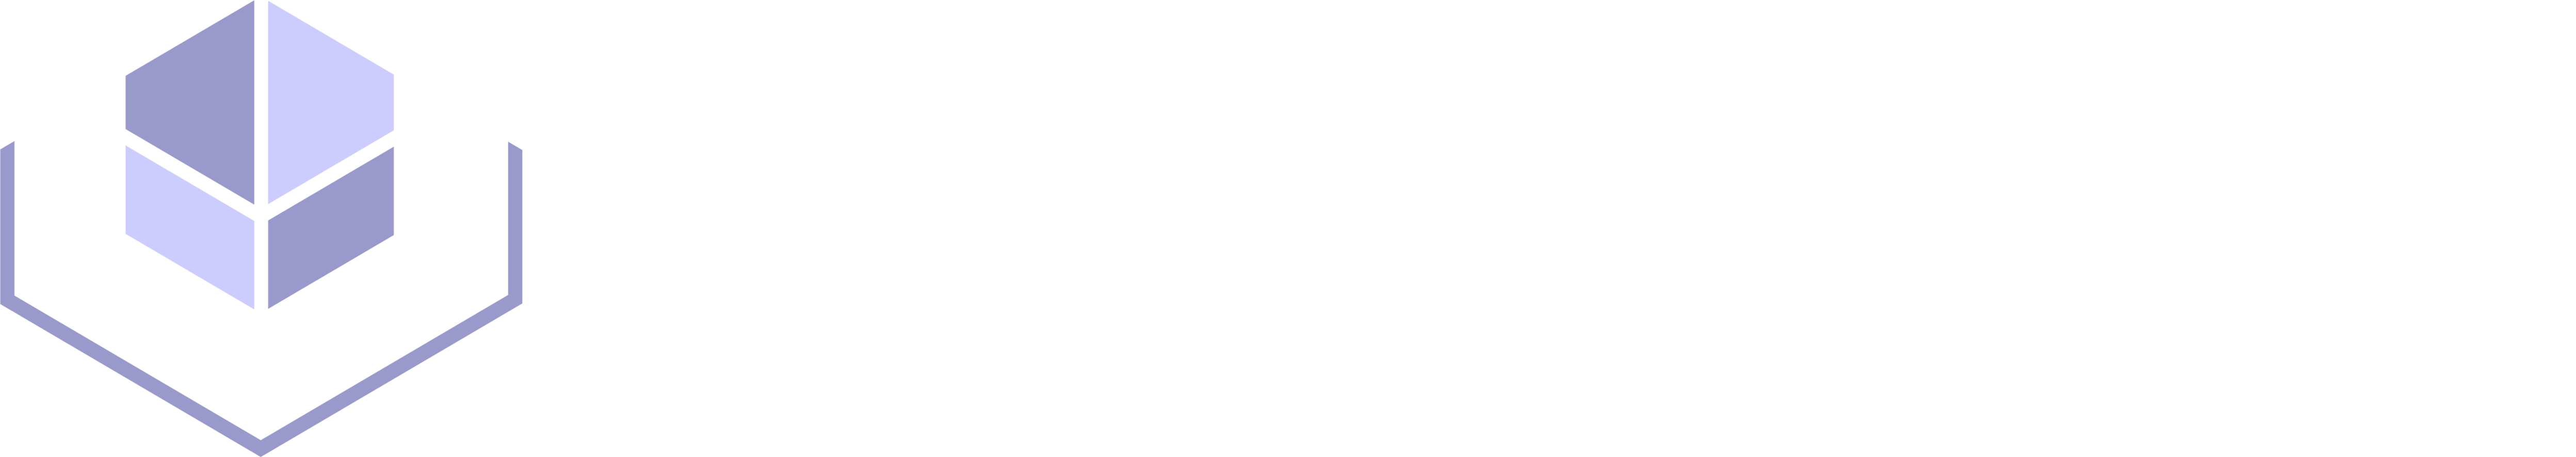 Voxelize Logo